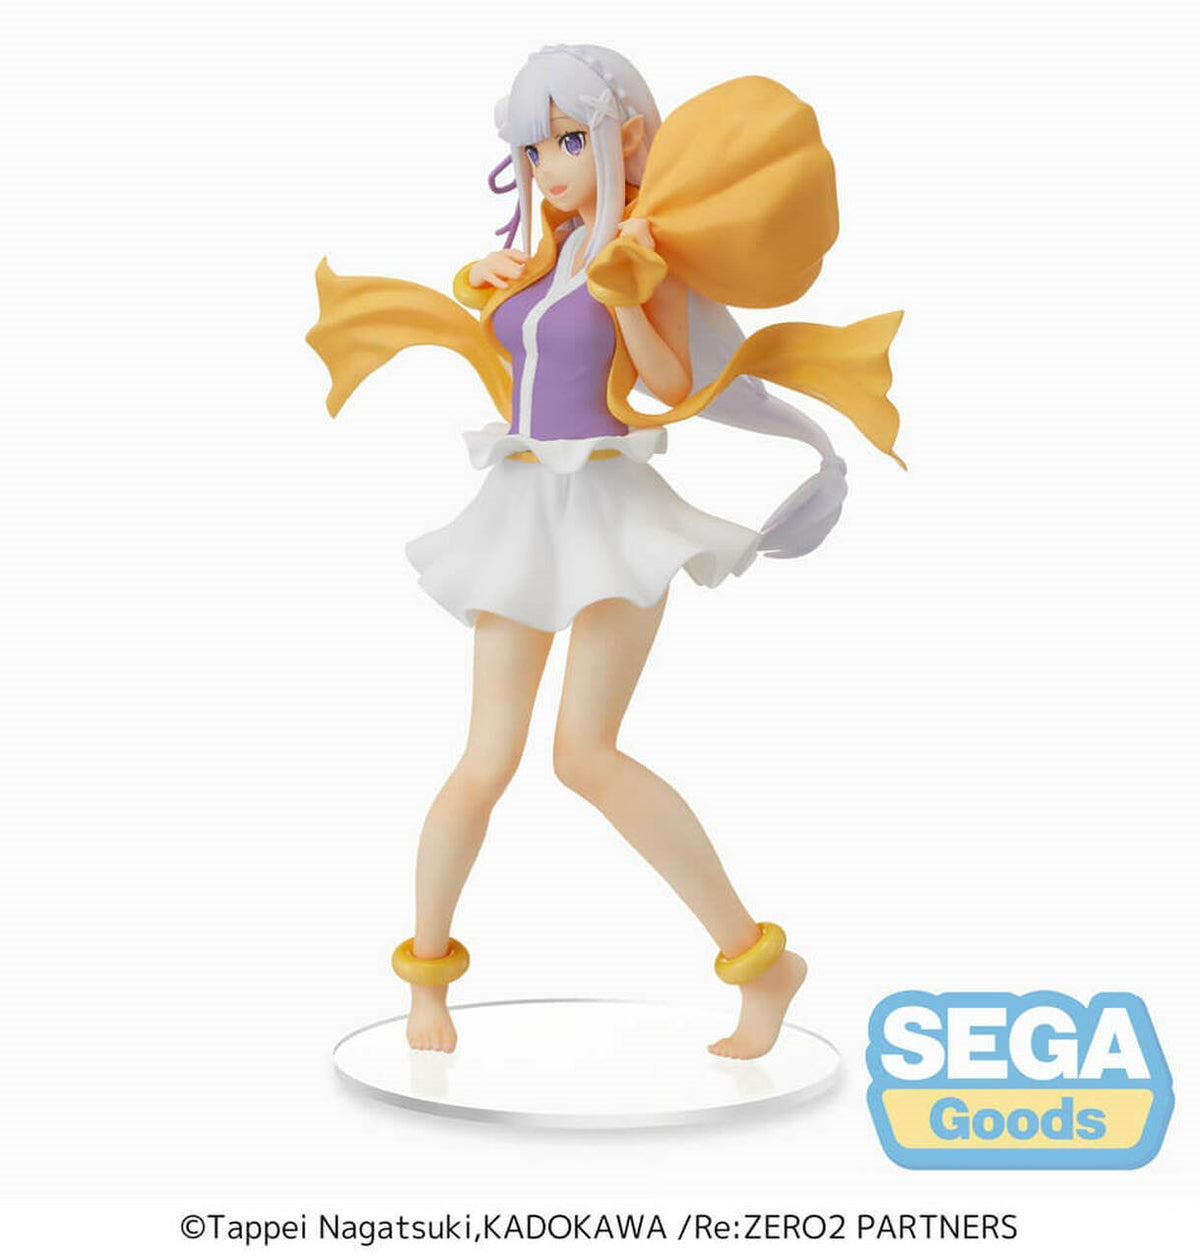 SEGA Emilia Wind God Re:Zero Starting Life in Another World SPM Prize Figure-Sega-Ace Cards &amp; Collectibles